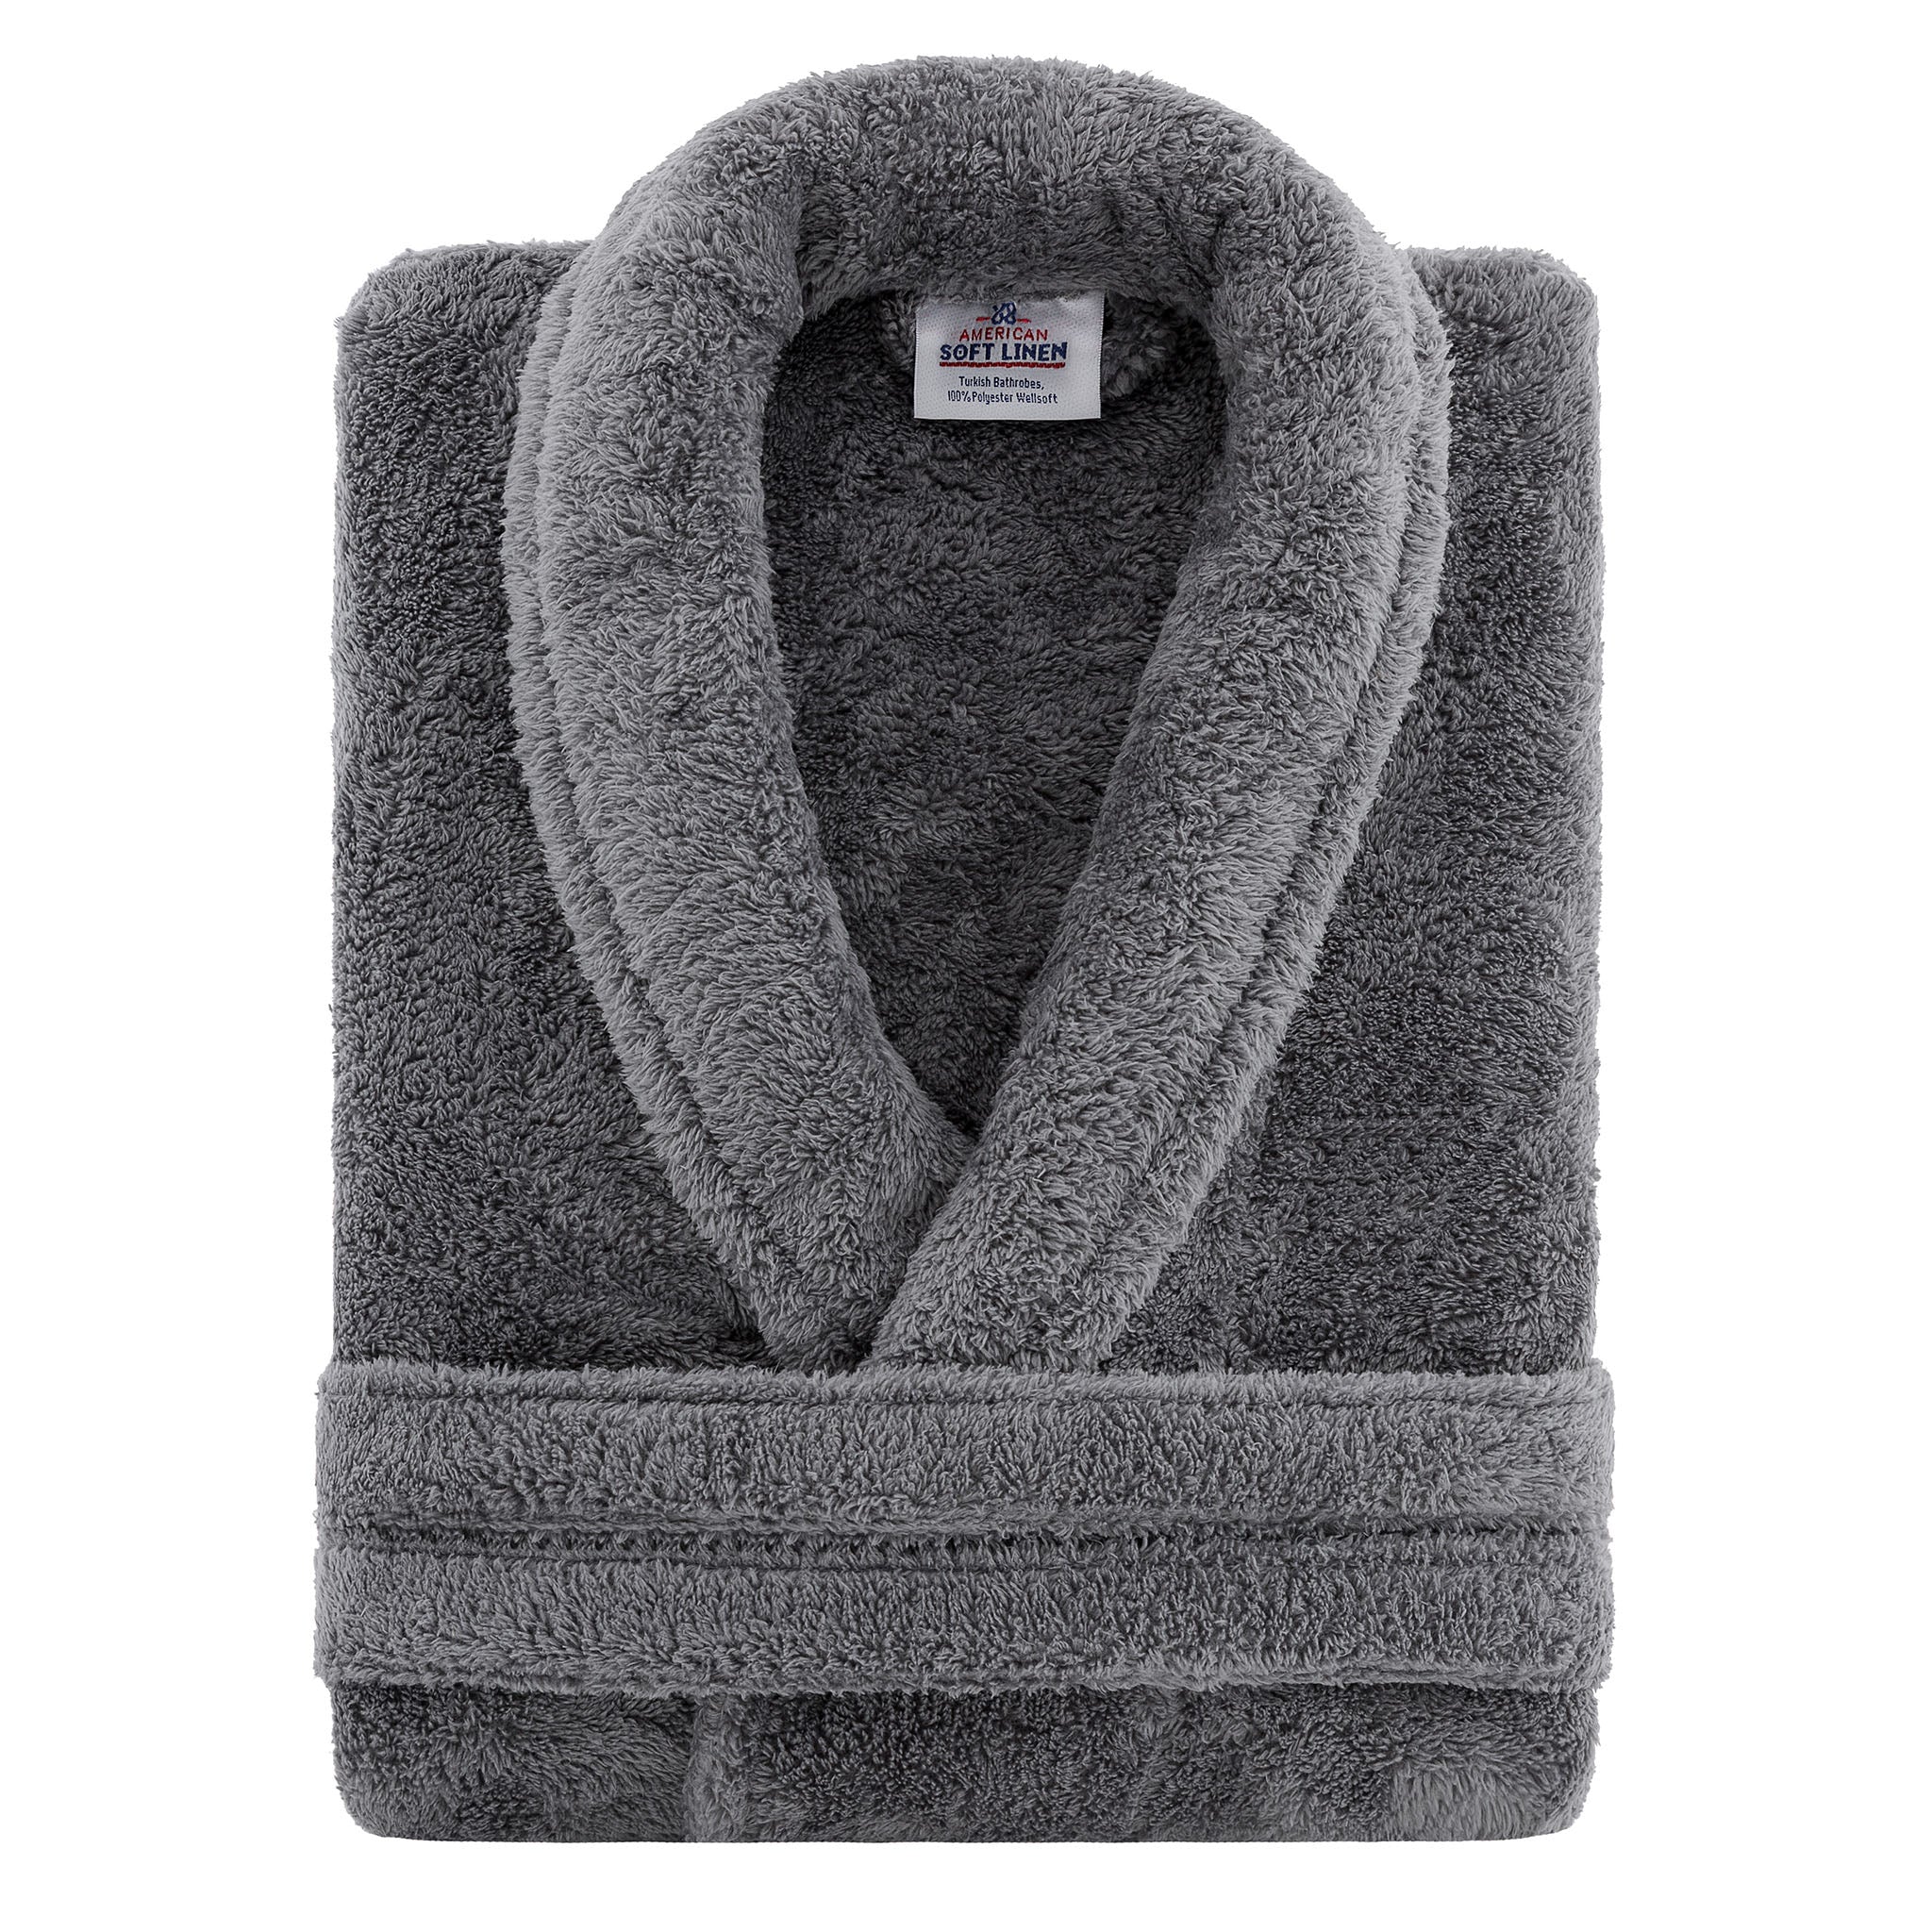 American Soft Linen Super Soft Absorbent and Fluffy Unisex Fleece Bathrobe -12 Set Case Pack -S-M-gray-3